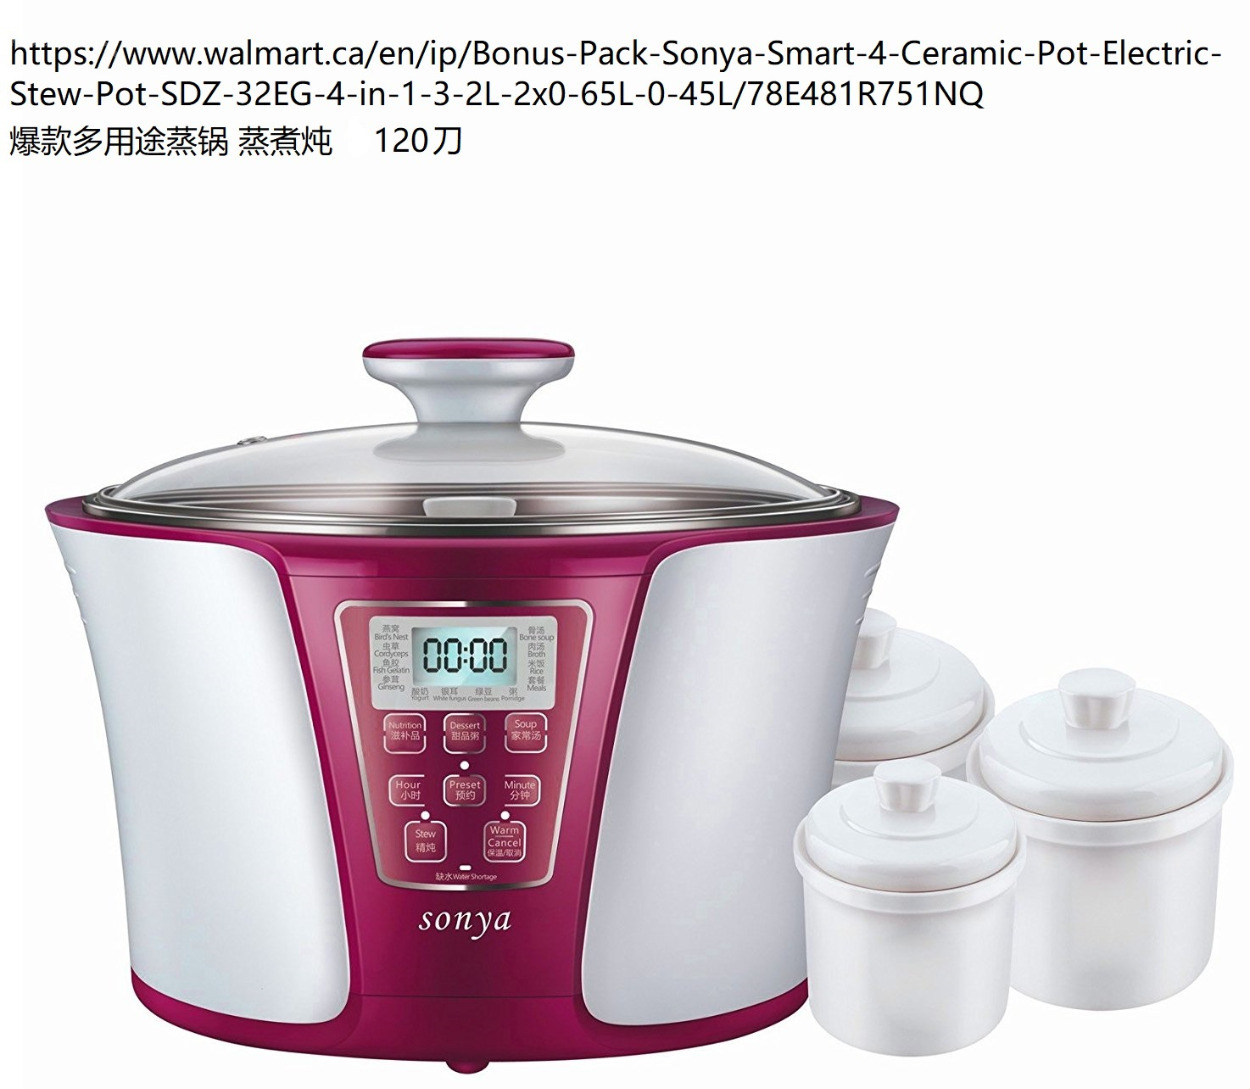 210603183354_ Pack Sonya Smart 4 Ceramic Pot Electric Stew Pot 4-in-1-2-1.jpg